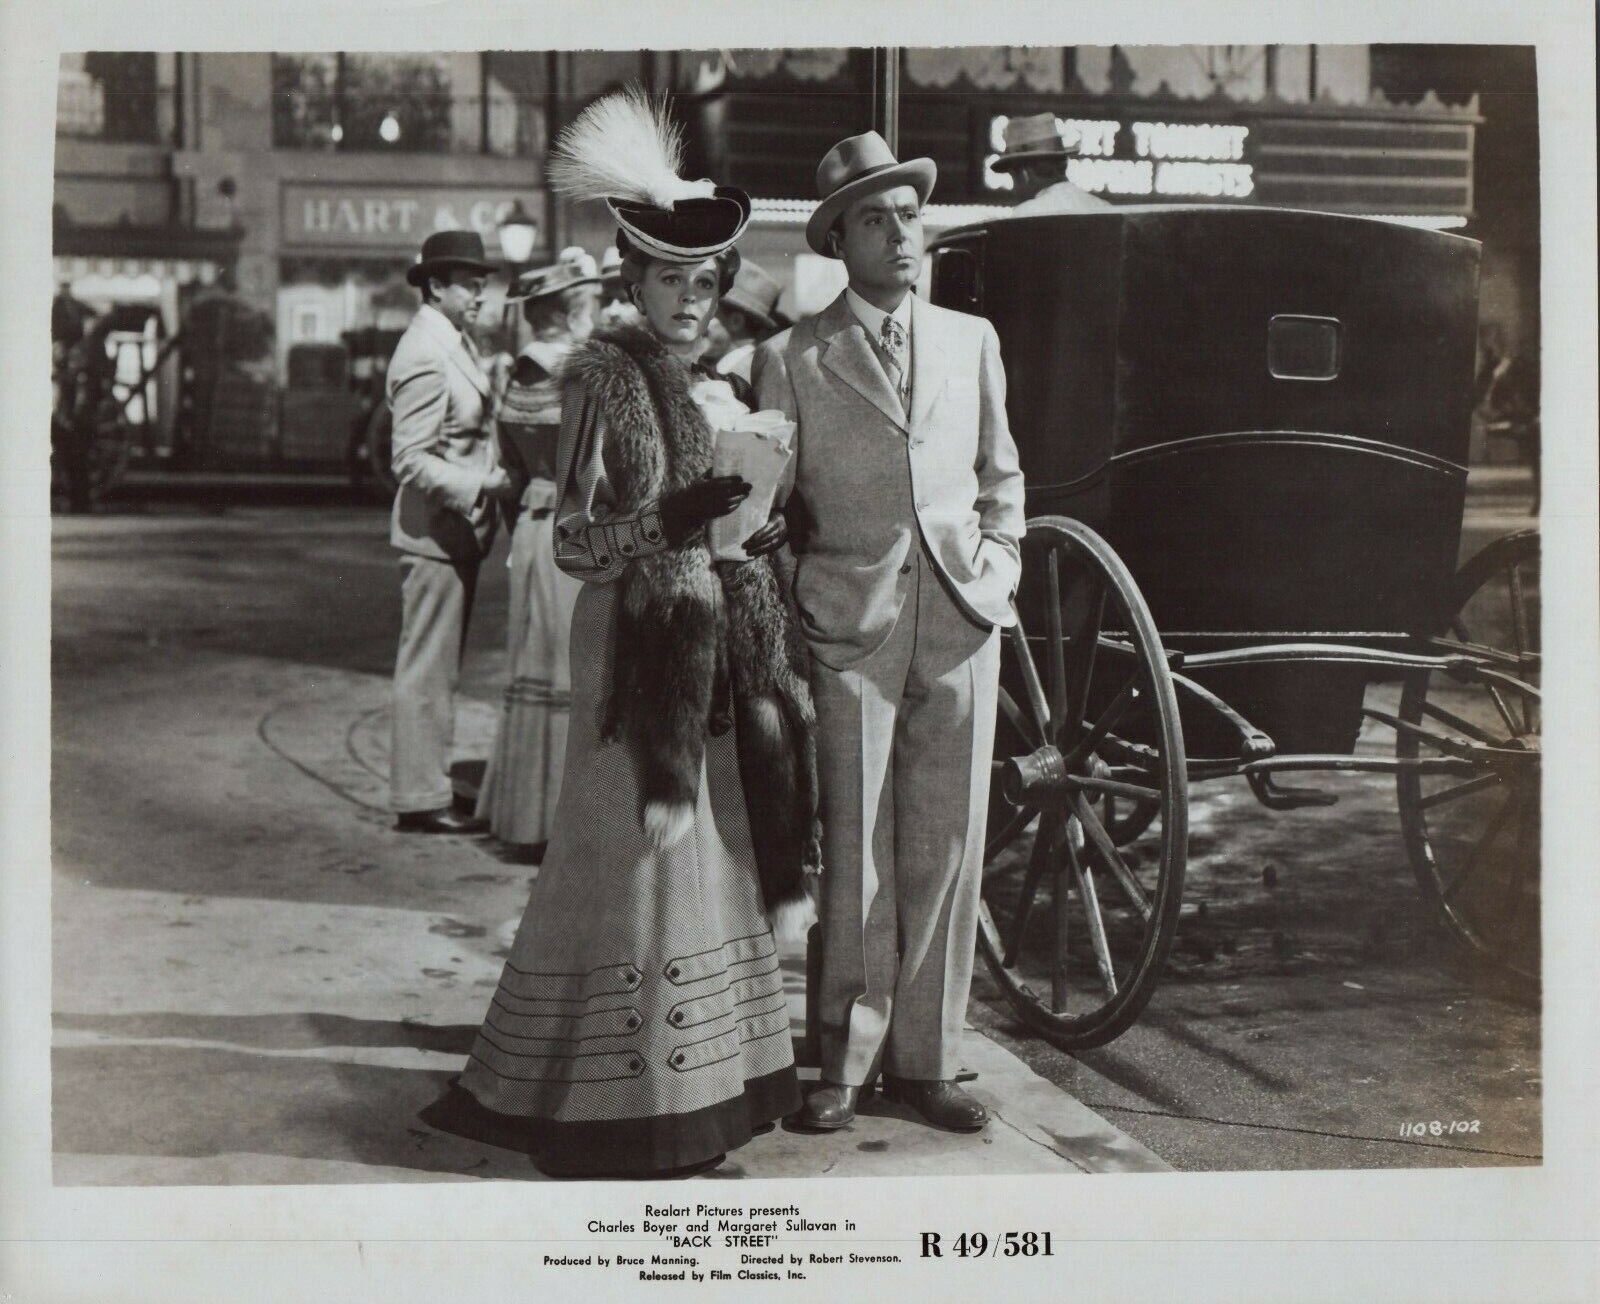 CHARLES BOYER MARGARET SULLAVAN 1941 Movie Promo Vintage 8x10 Photo Poster painting BACK STREET